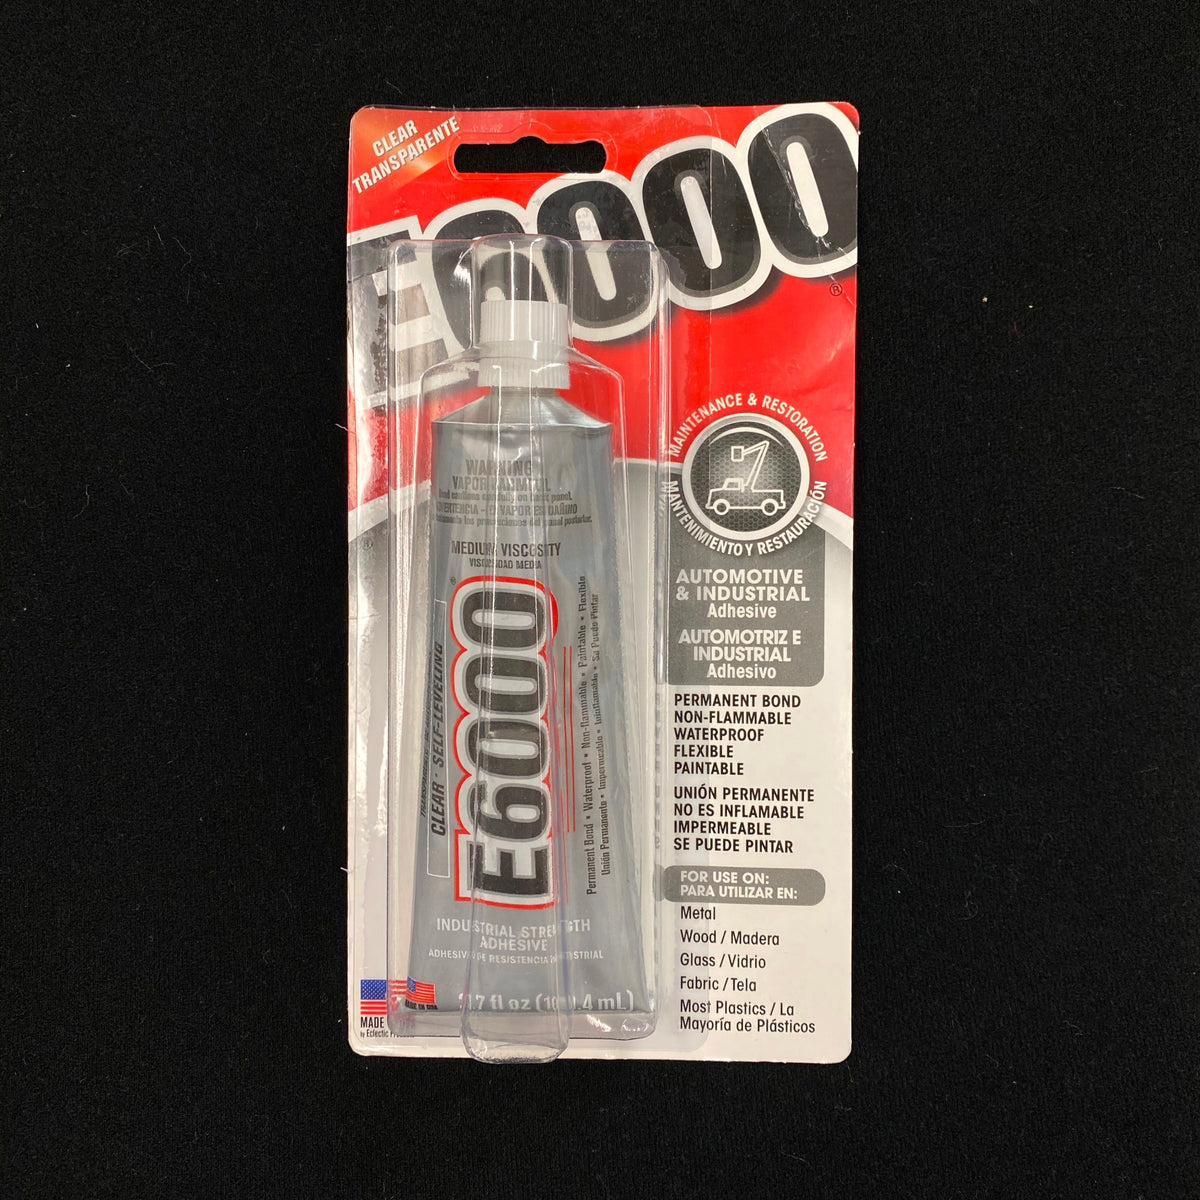 Eclectic E6000 Multi-purpose Adhesive - 3.7 fl oz tube